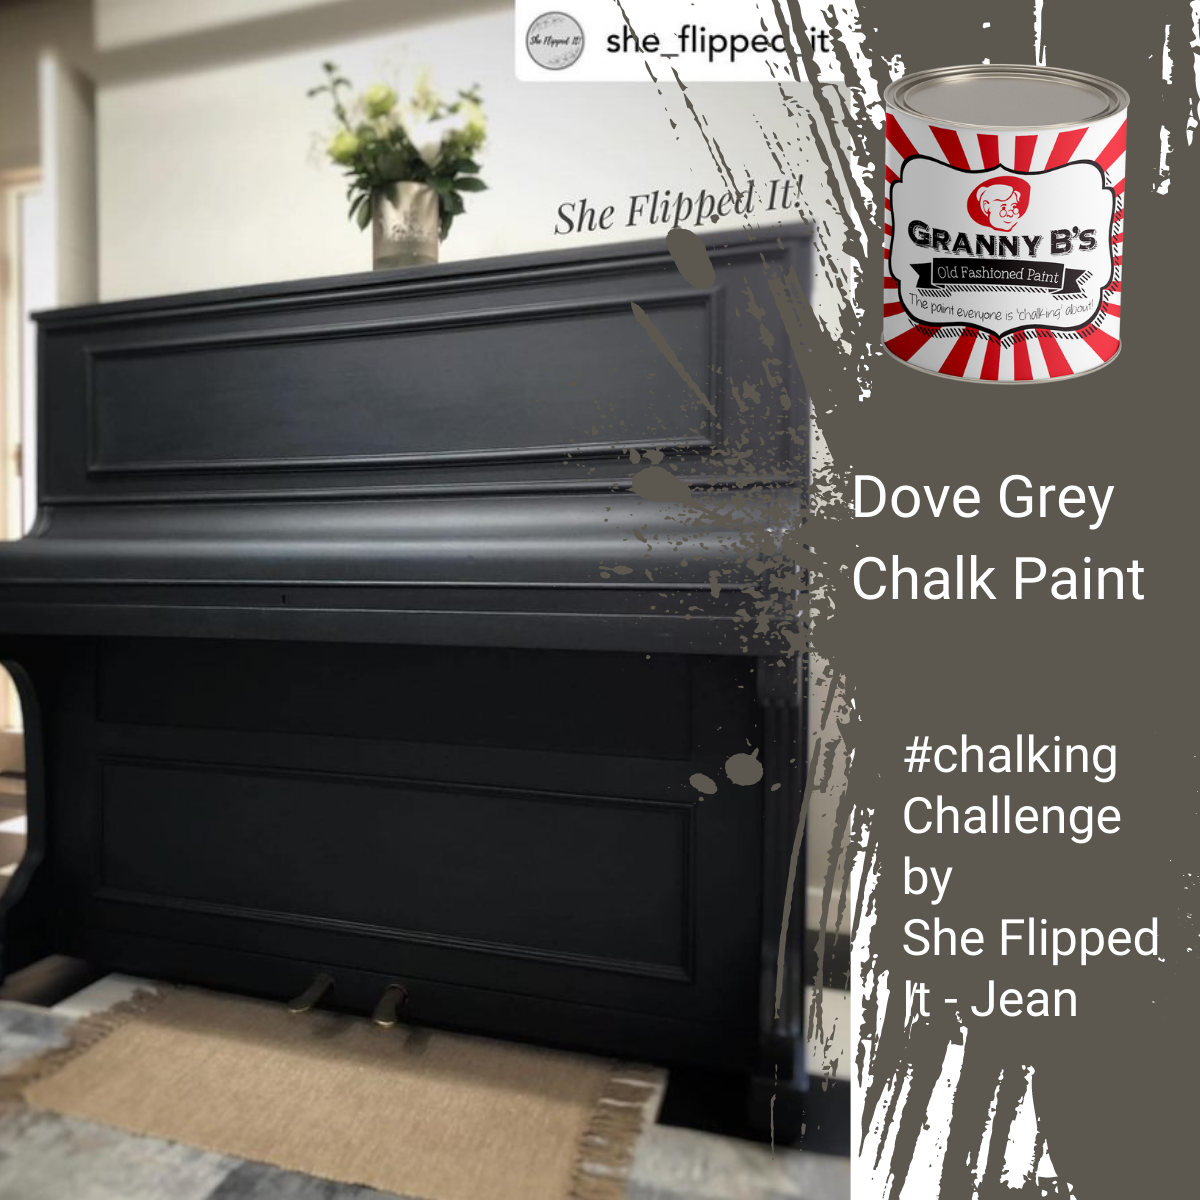 Chalkpaint - Dove Grey (Charcoal)